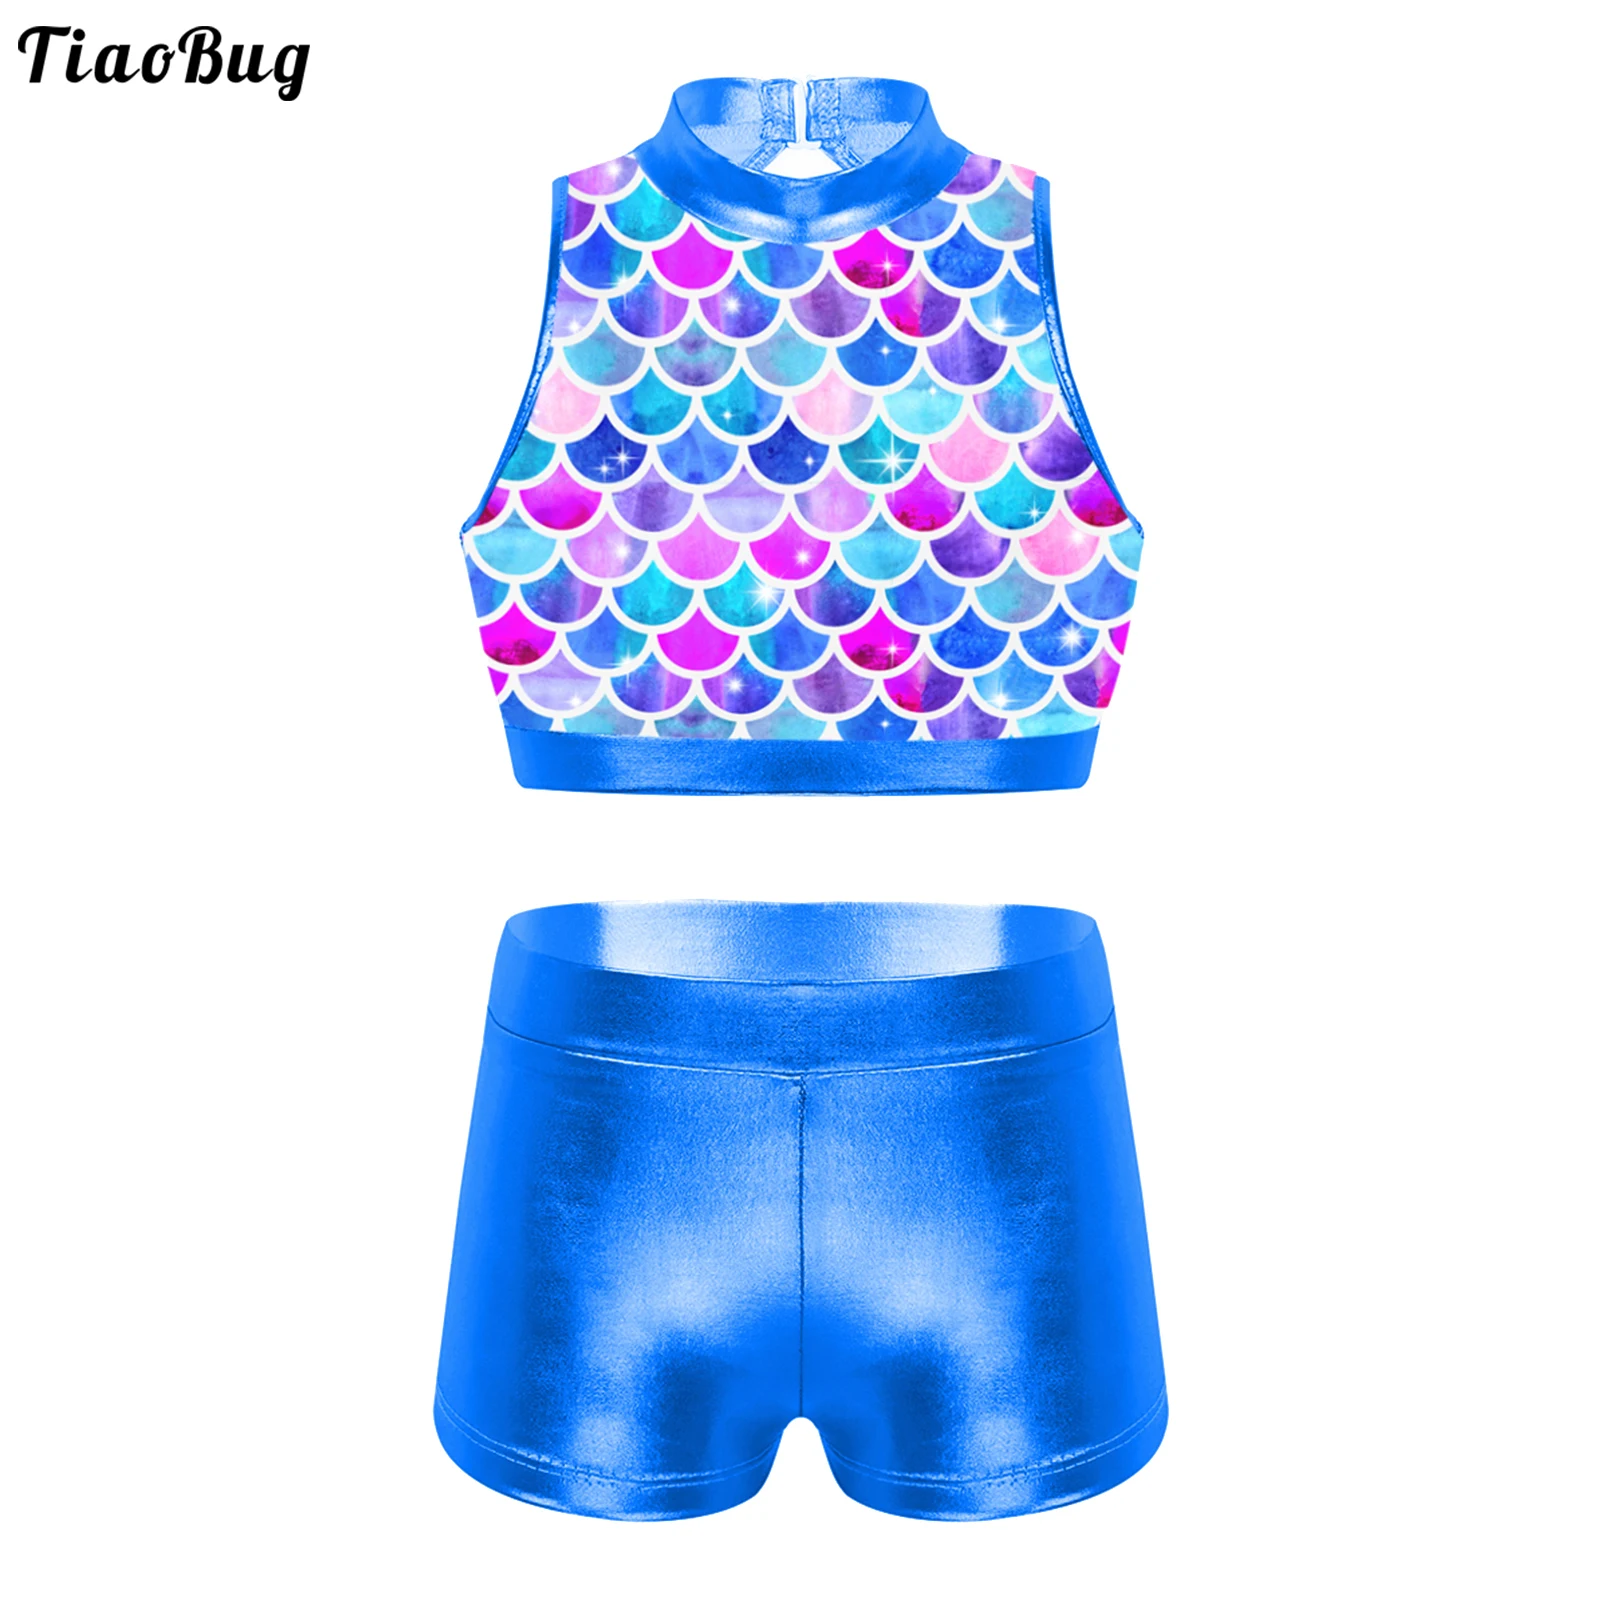 

TiaoBug Summer Kids Girls 2Pcs Dancewear Outfit Sparkly Sequins Sleeveless Cutout Back Crop Top With Metallic Bottoms Set